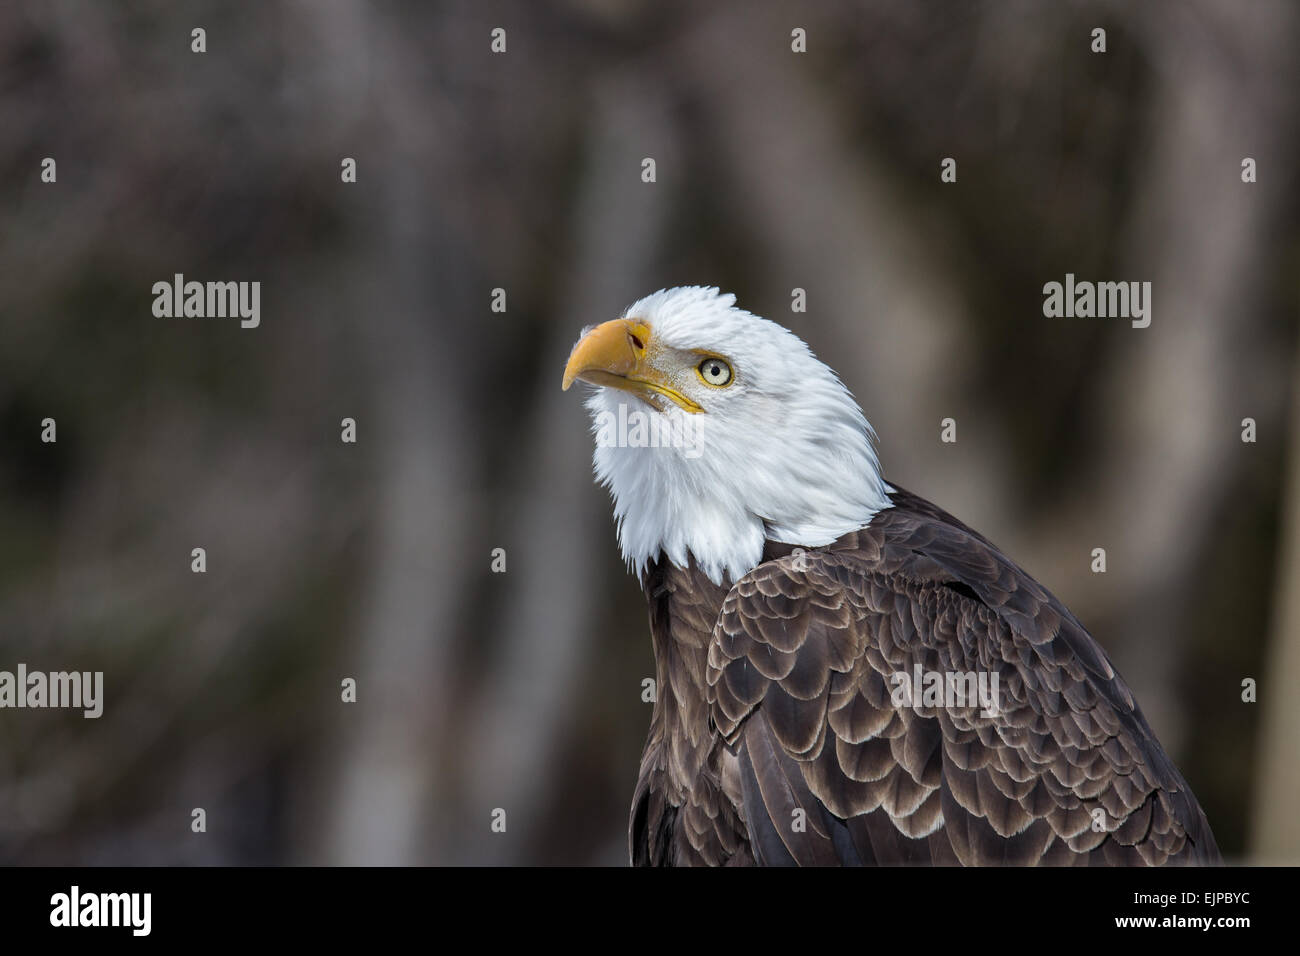 Bald eagle profile looking up Stock Photo